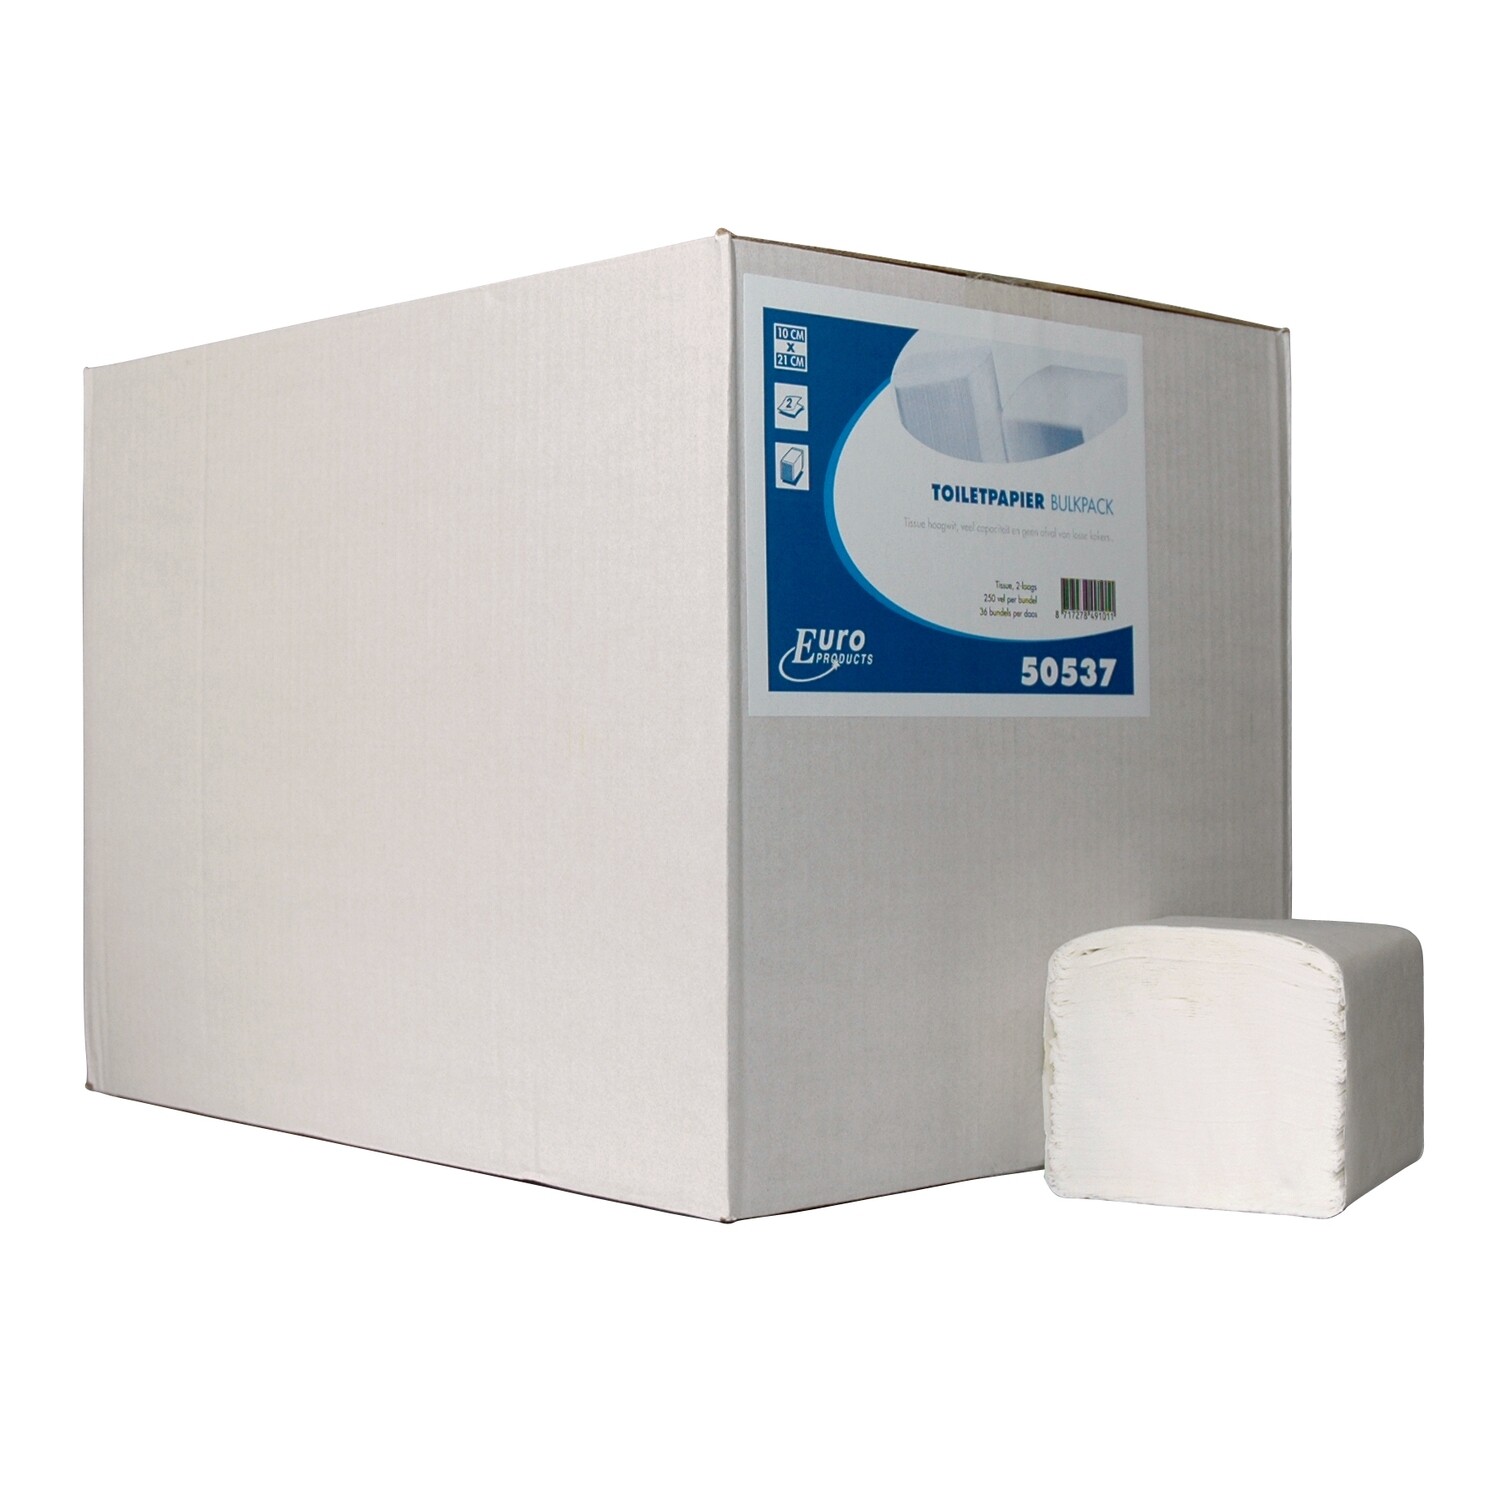 P50537 Euro bulkpack, tissue wit, verpakt per 36 bundels